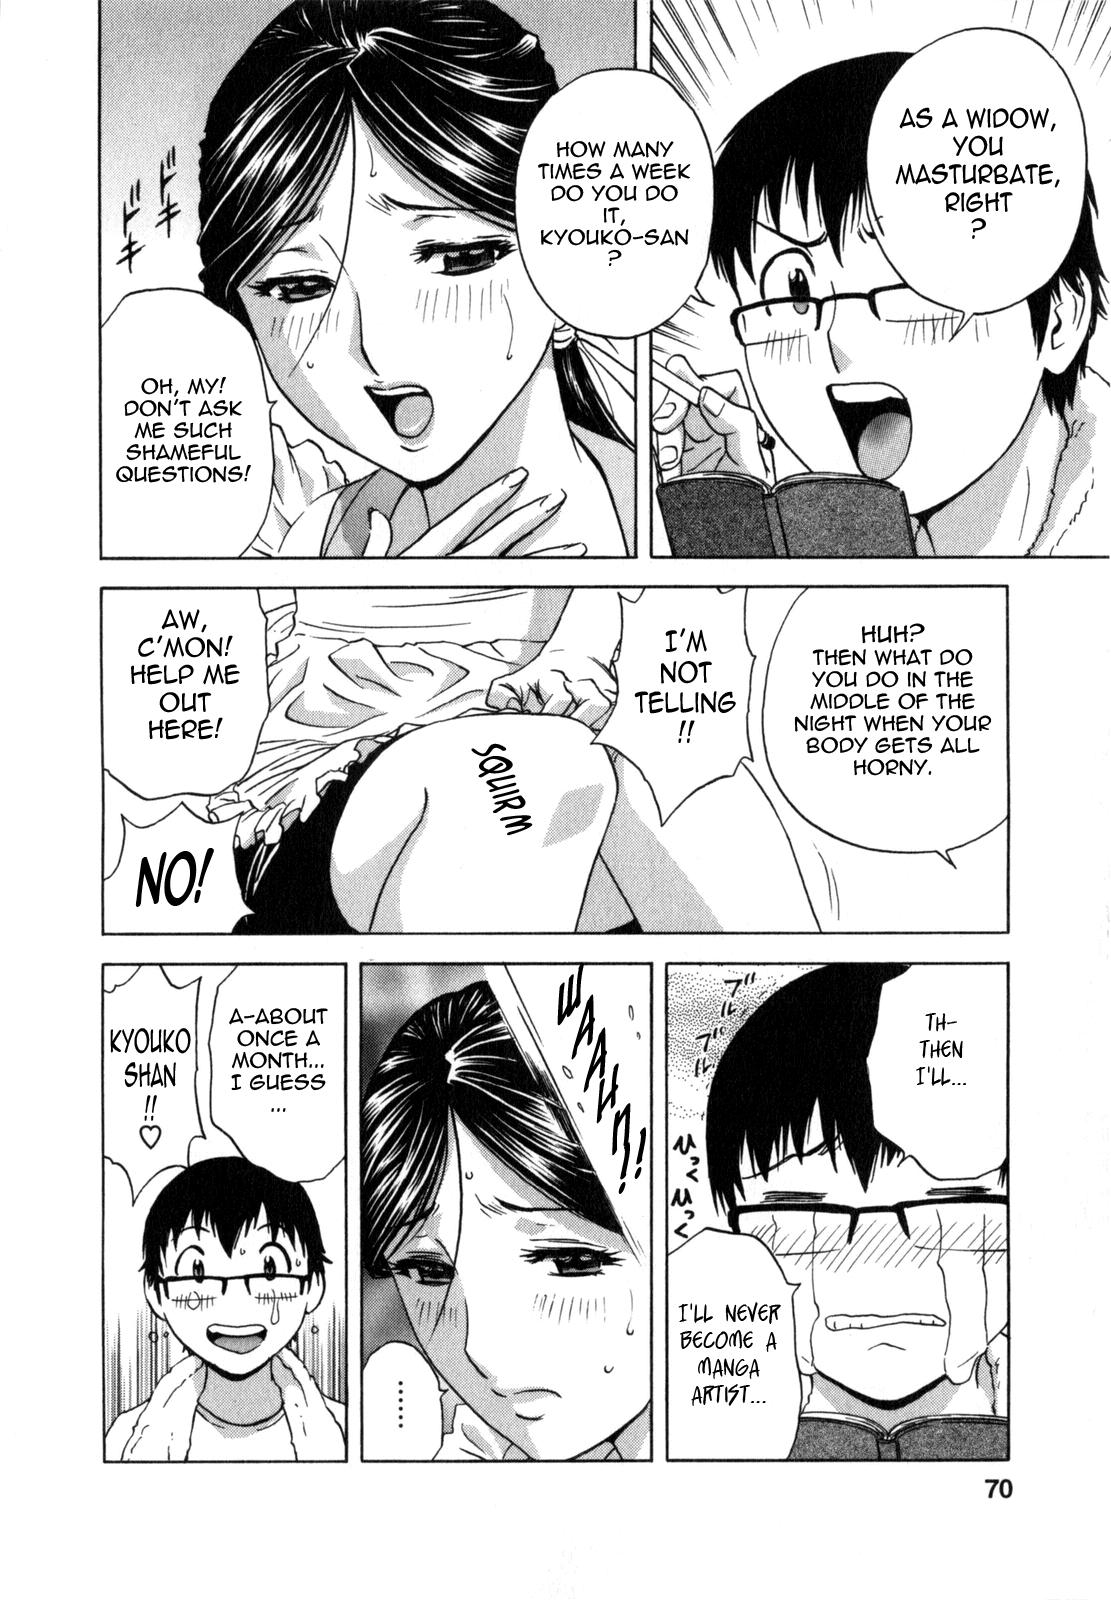 [Hidemaru] Life with Married Women Just Like a Manga 1 - Ch. 1-8 [English] {Tadanohito} 73